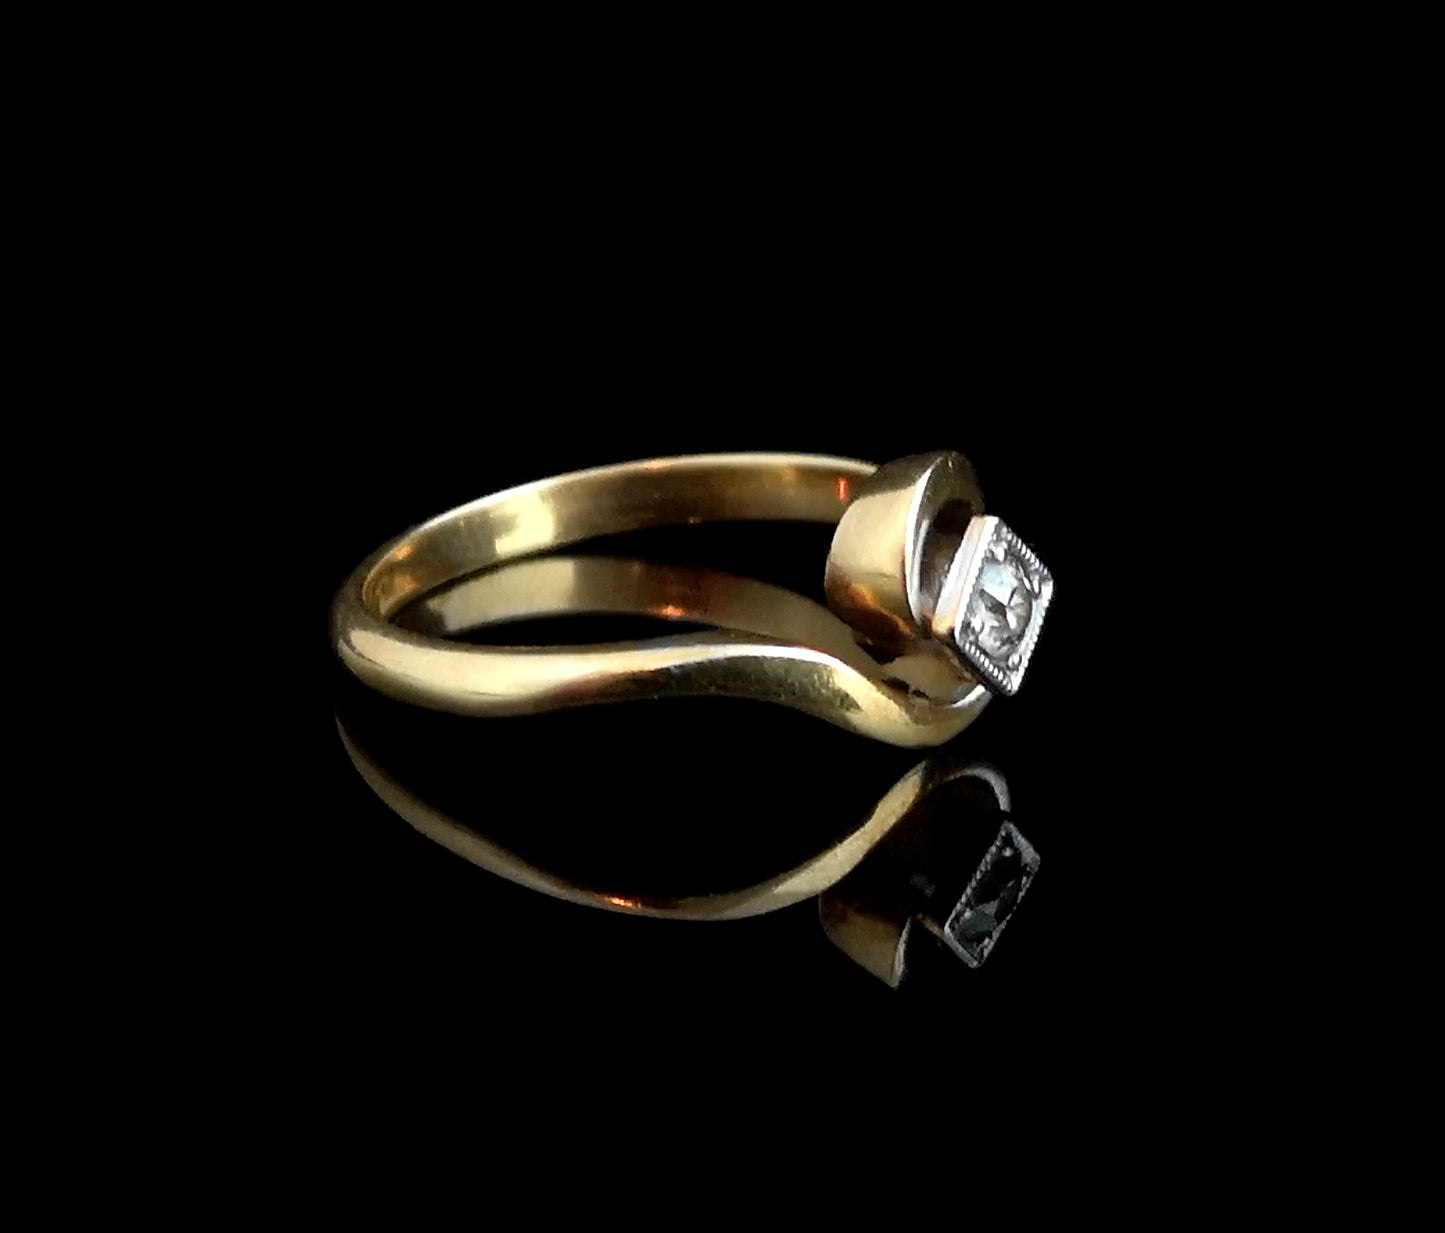 Vintage Art Deco diamond ring, crossover, 18ct gold and platinum